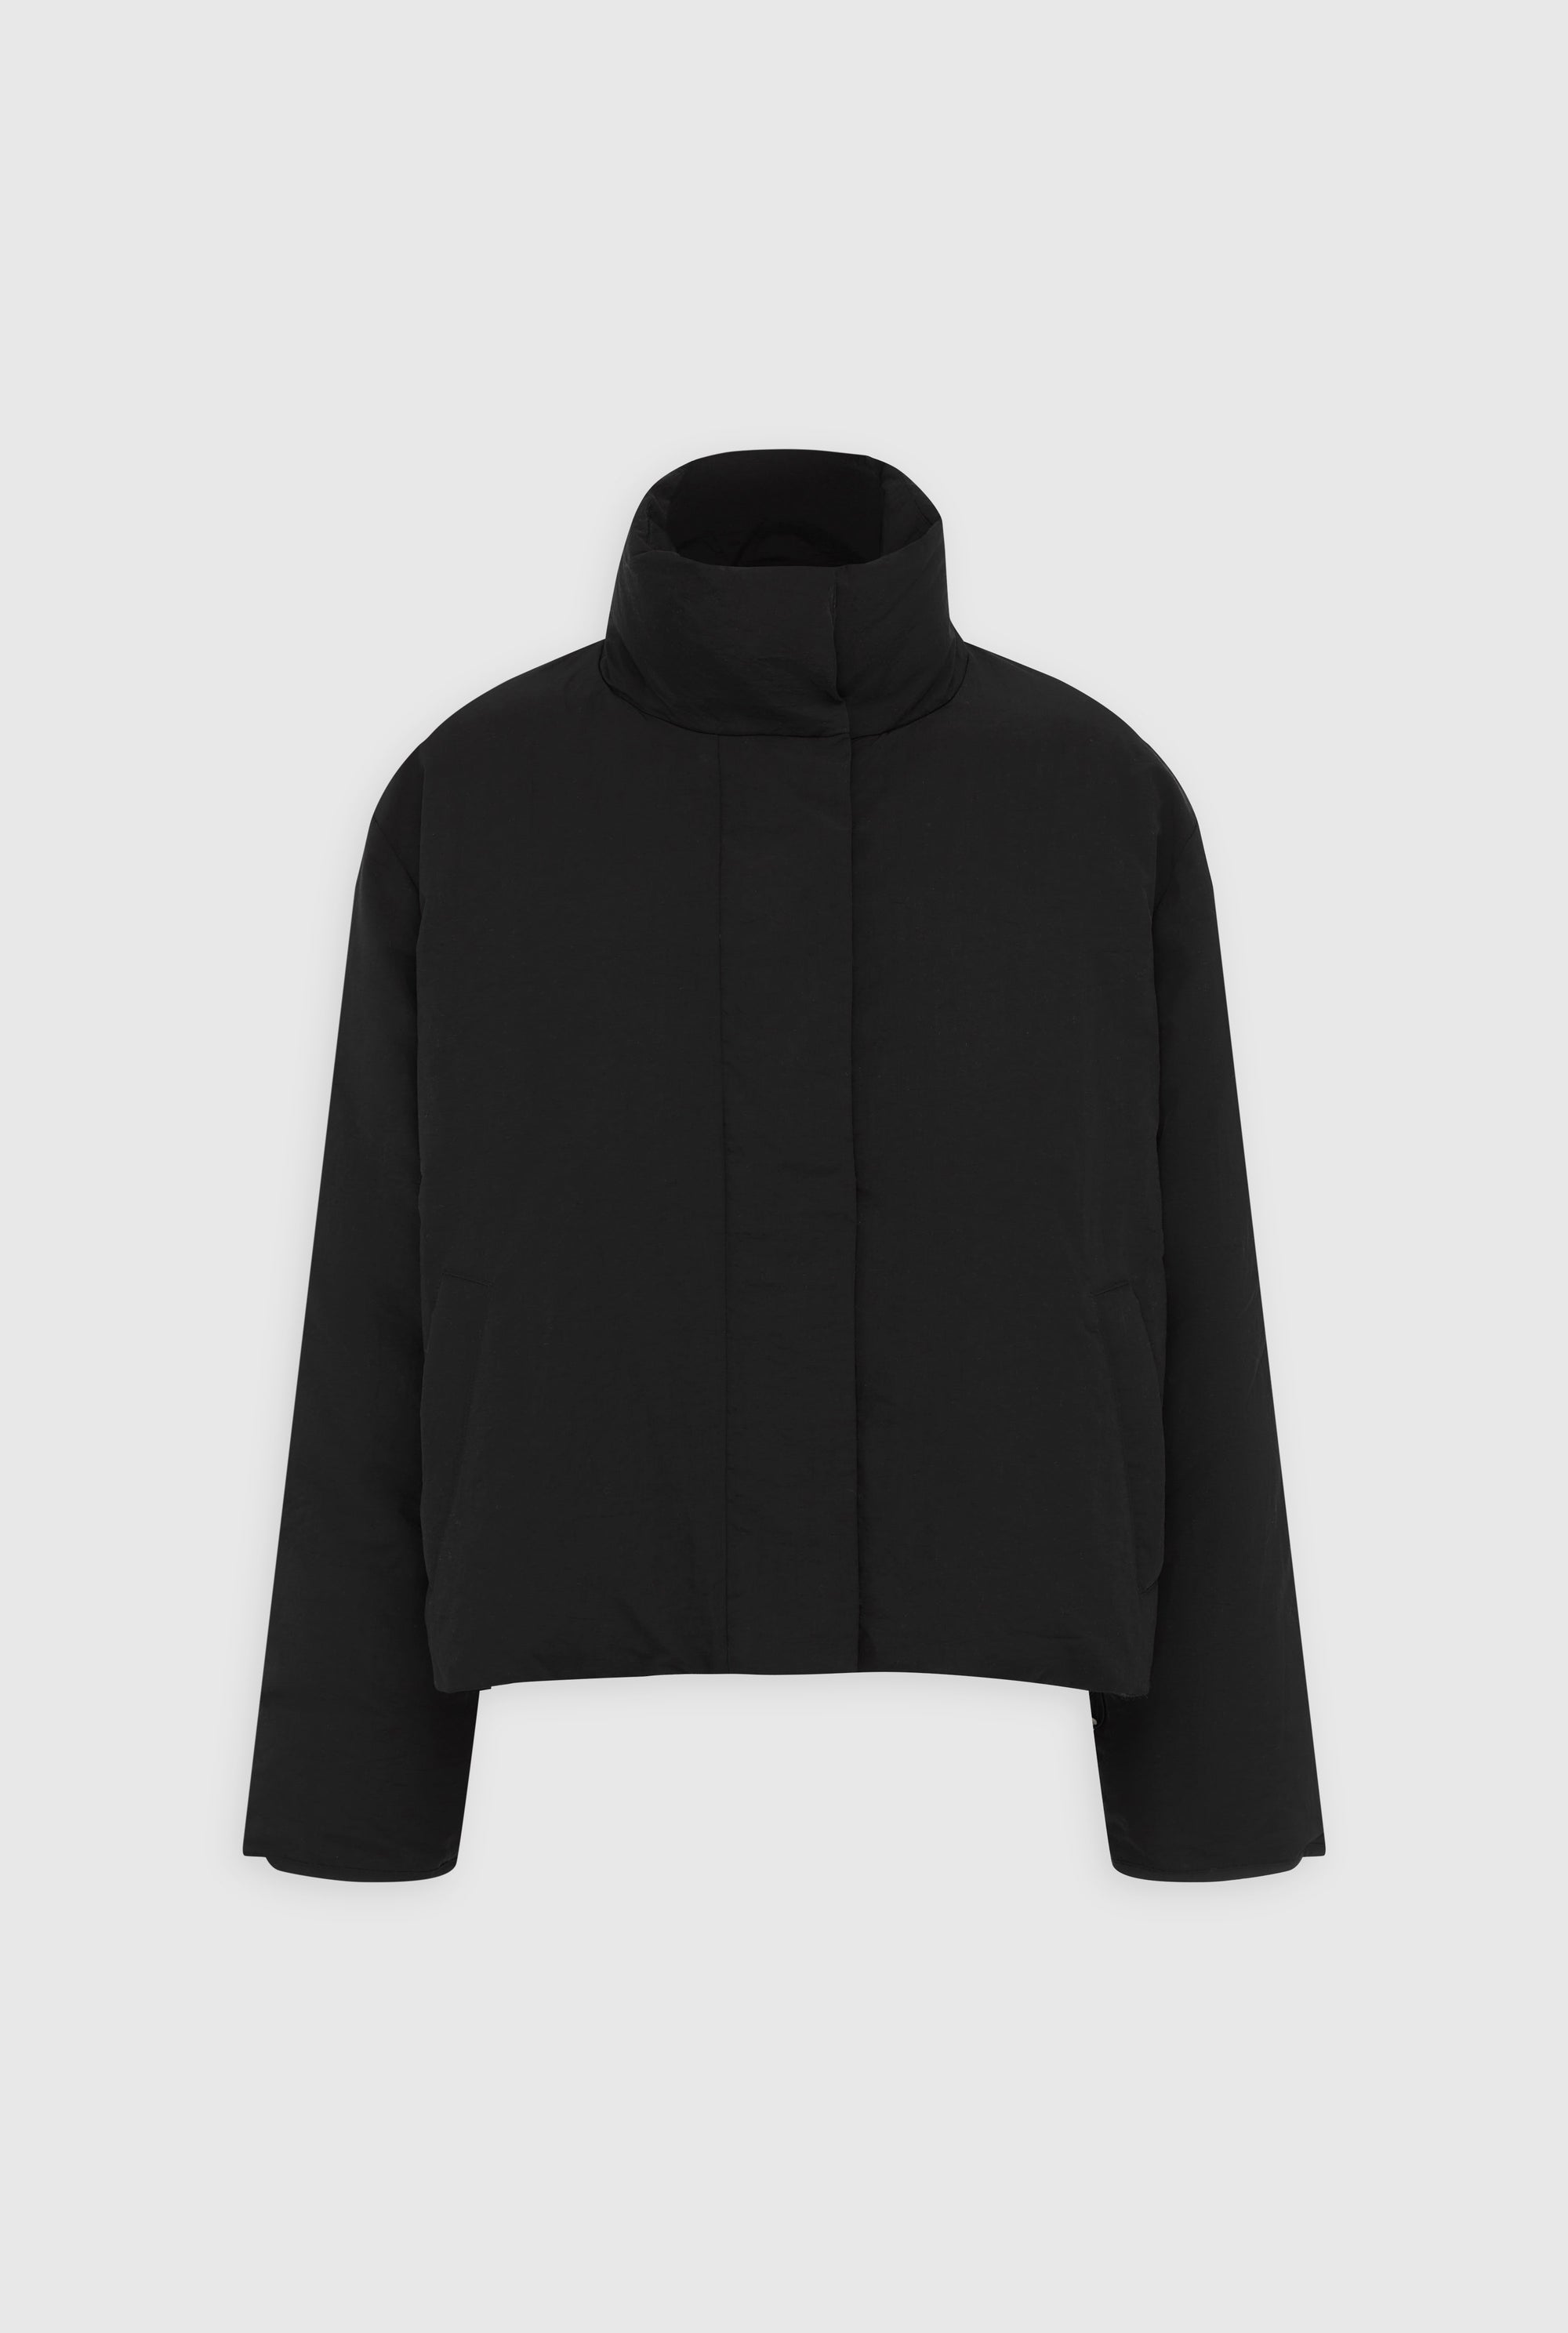 Nylon Puffer Jacket in Black | Venroy | Premium Leisurewear designed in ...